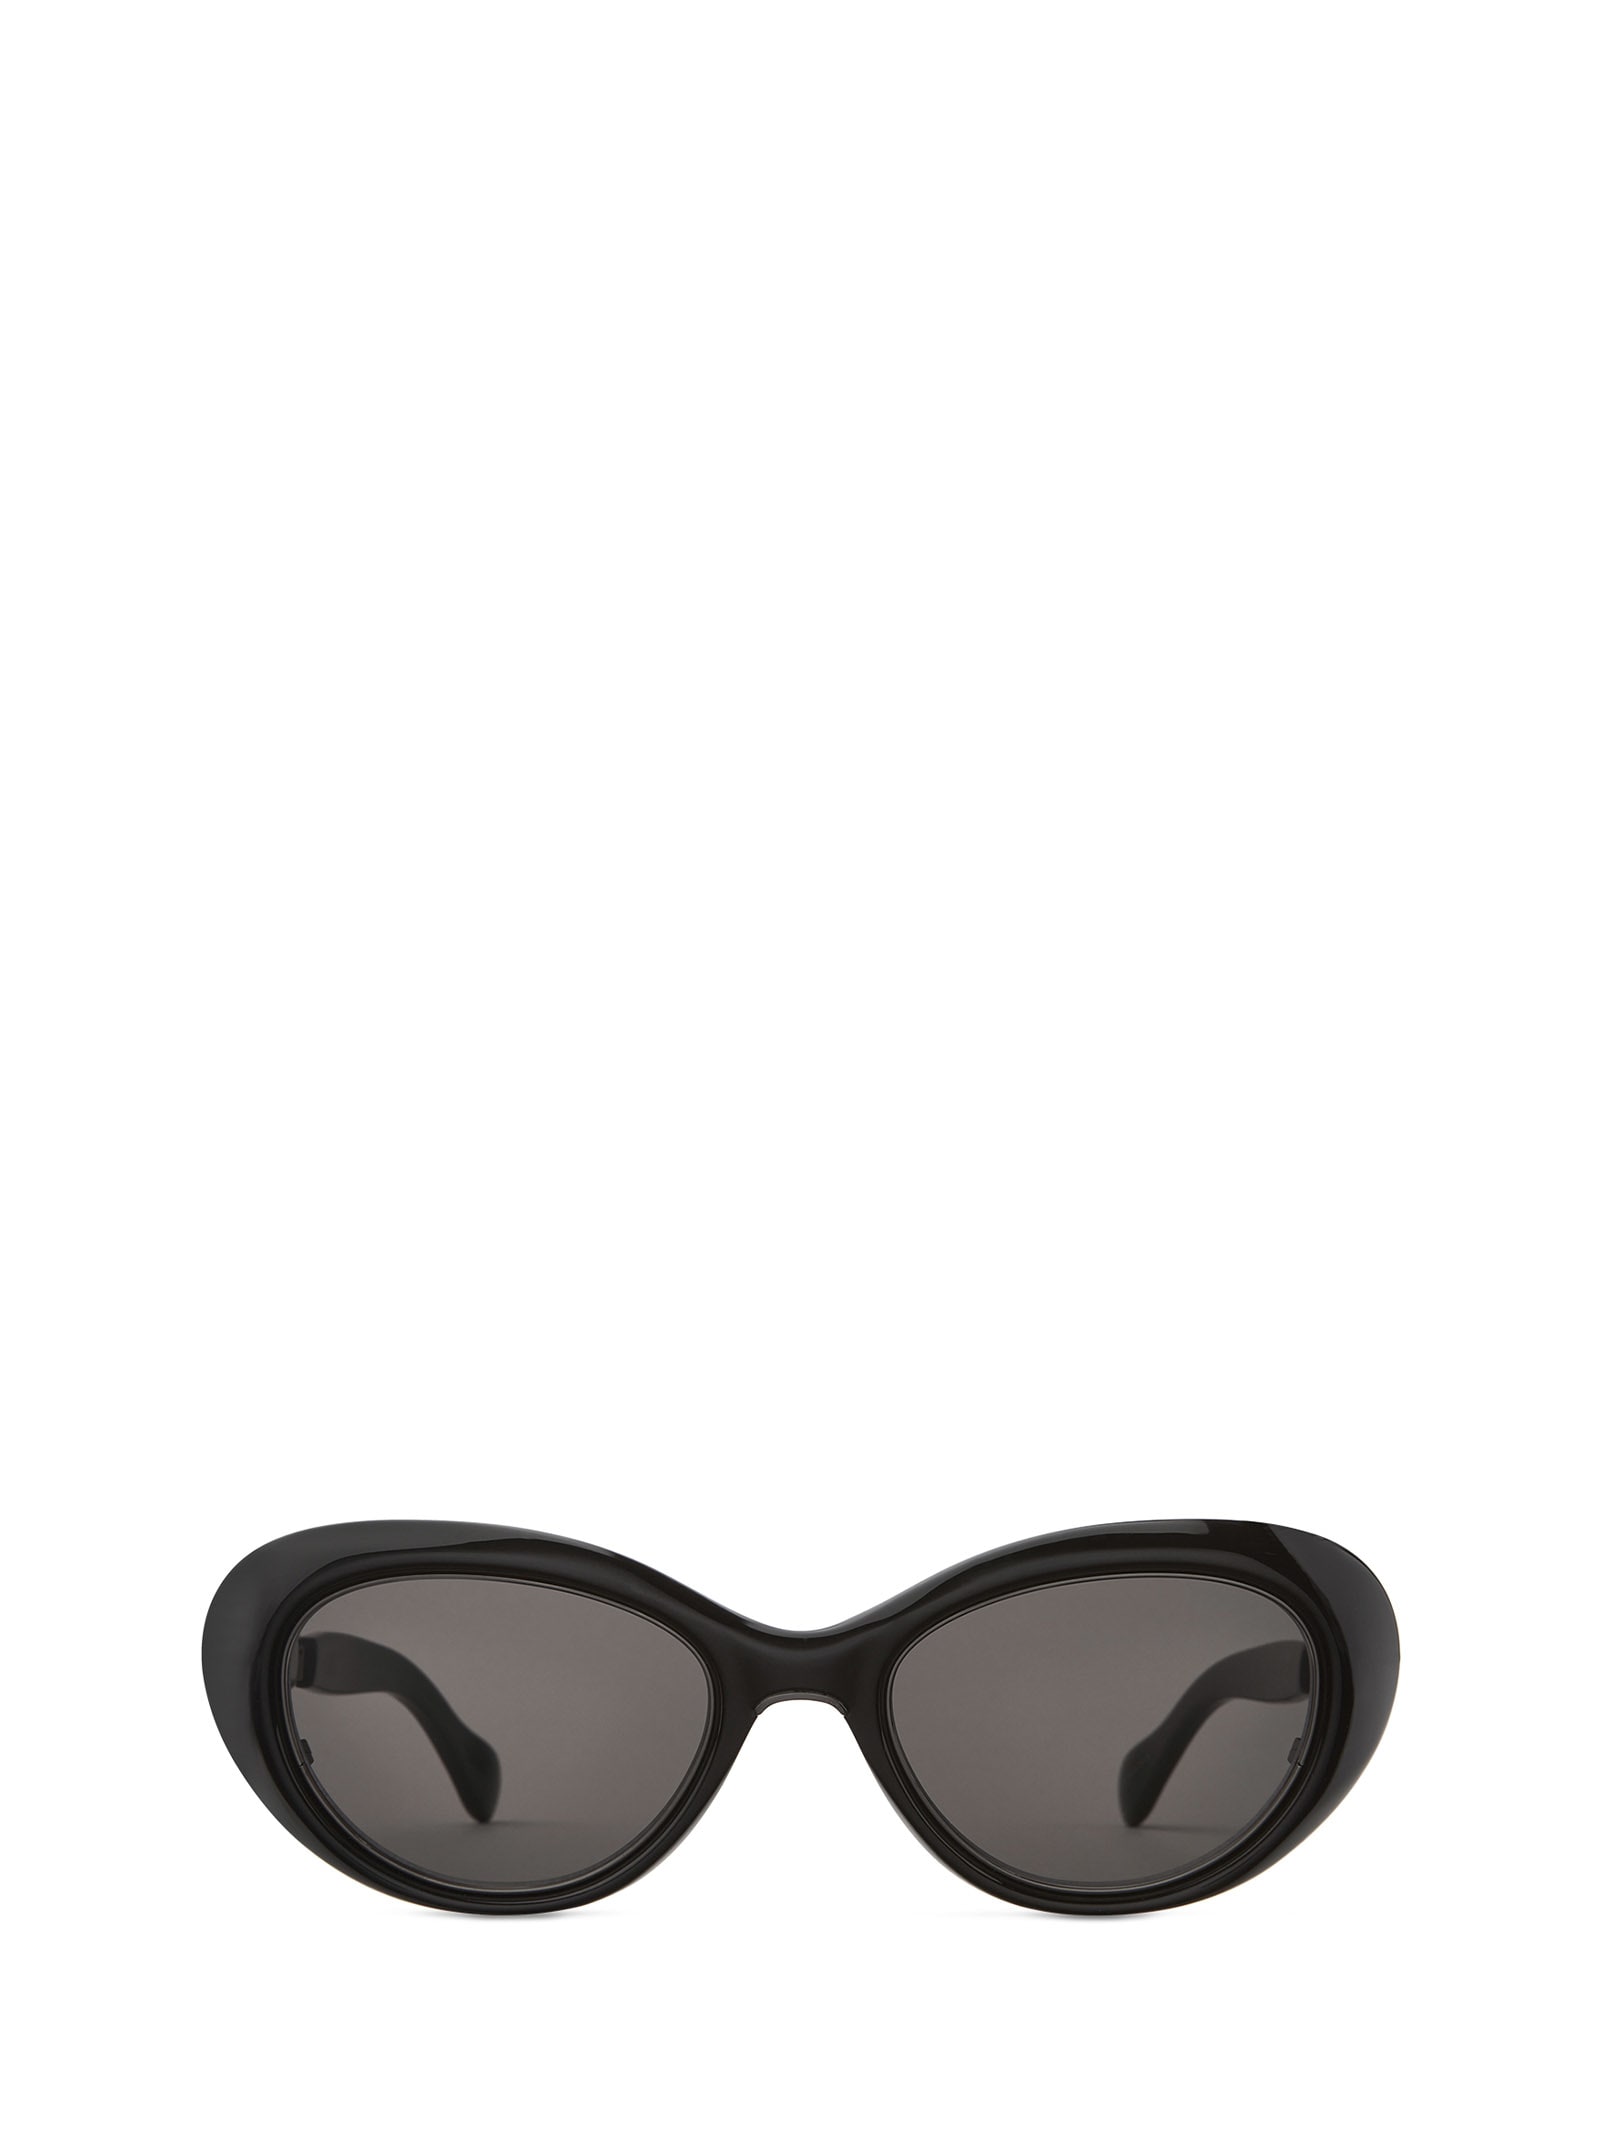 Selma S Black Sunglasses